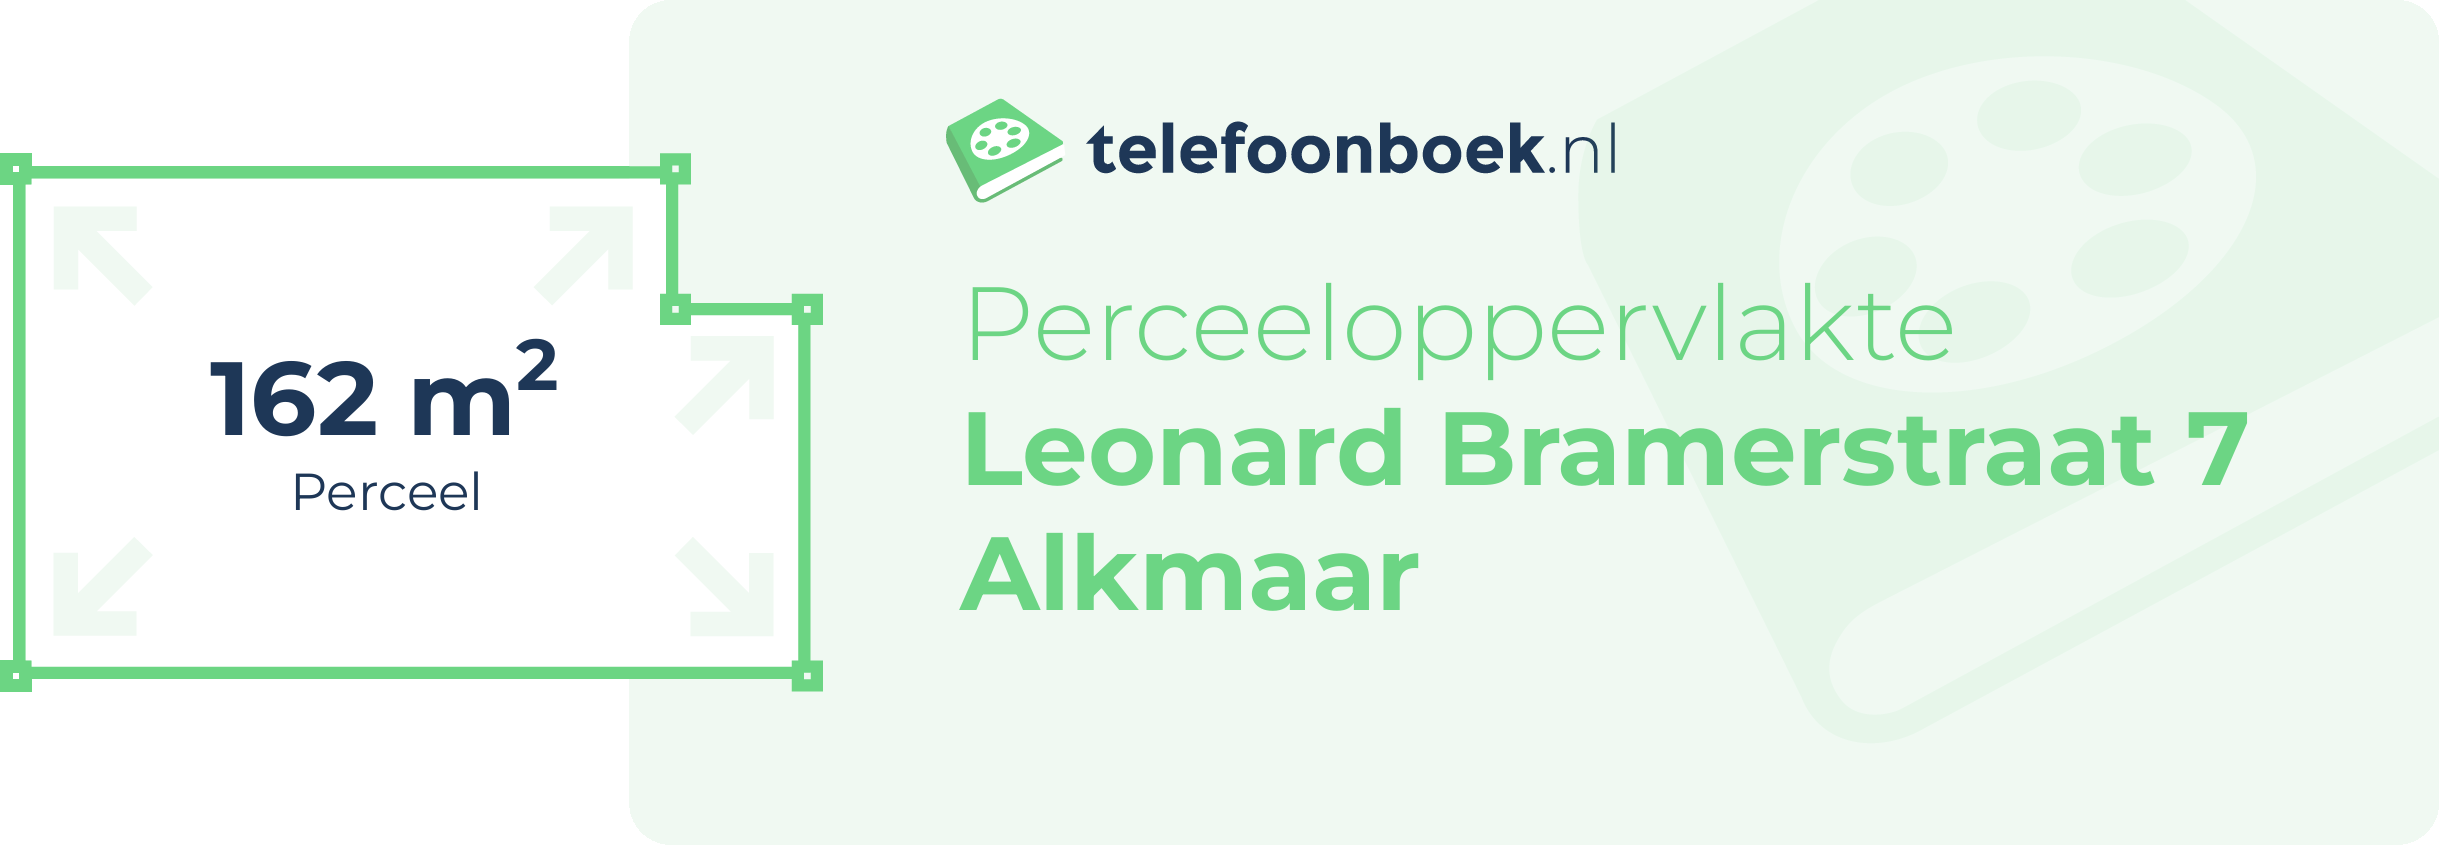 Perceeloppervlakte Leonard Bramerstraat 7 Alkmaar